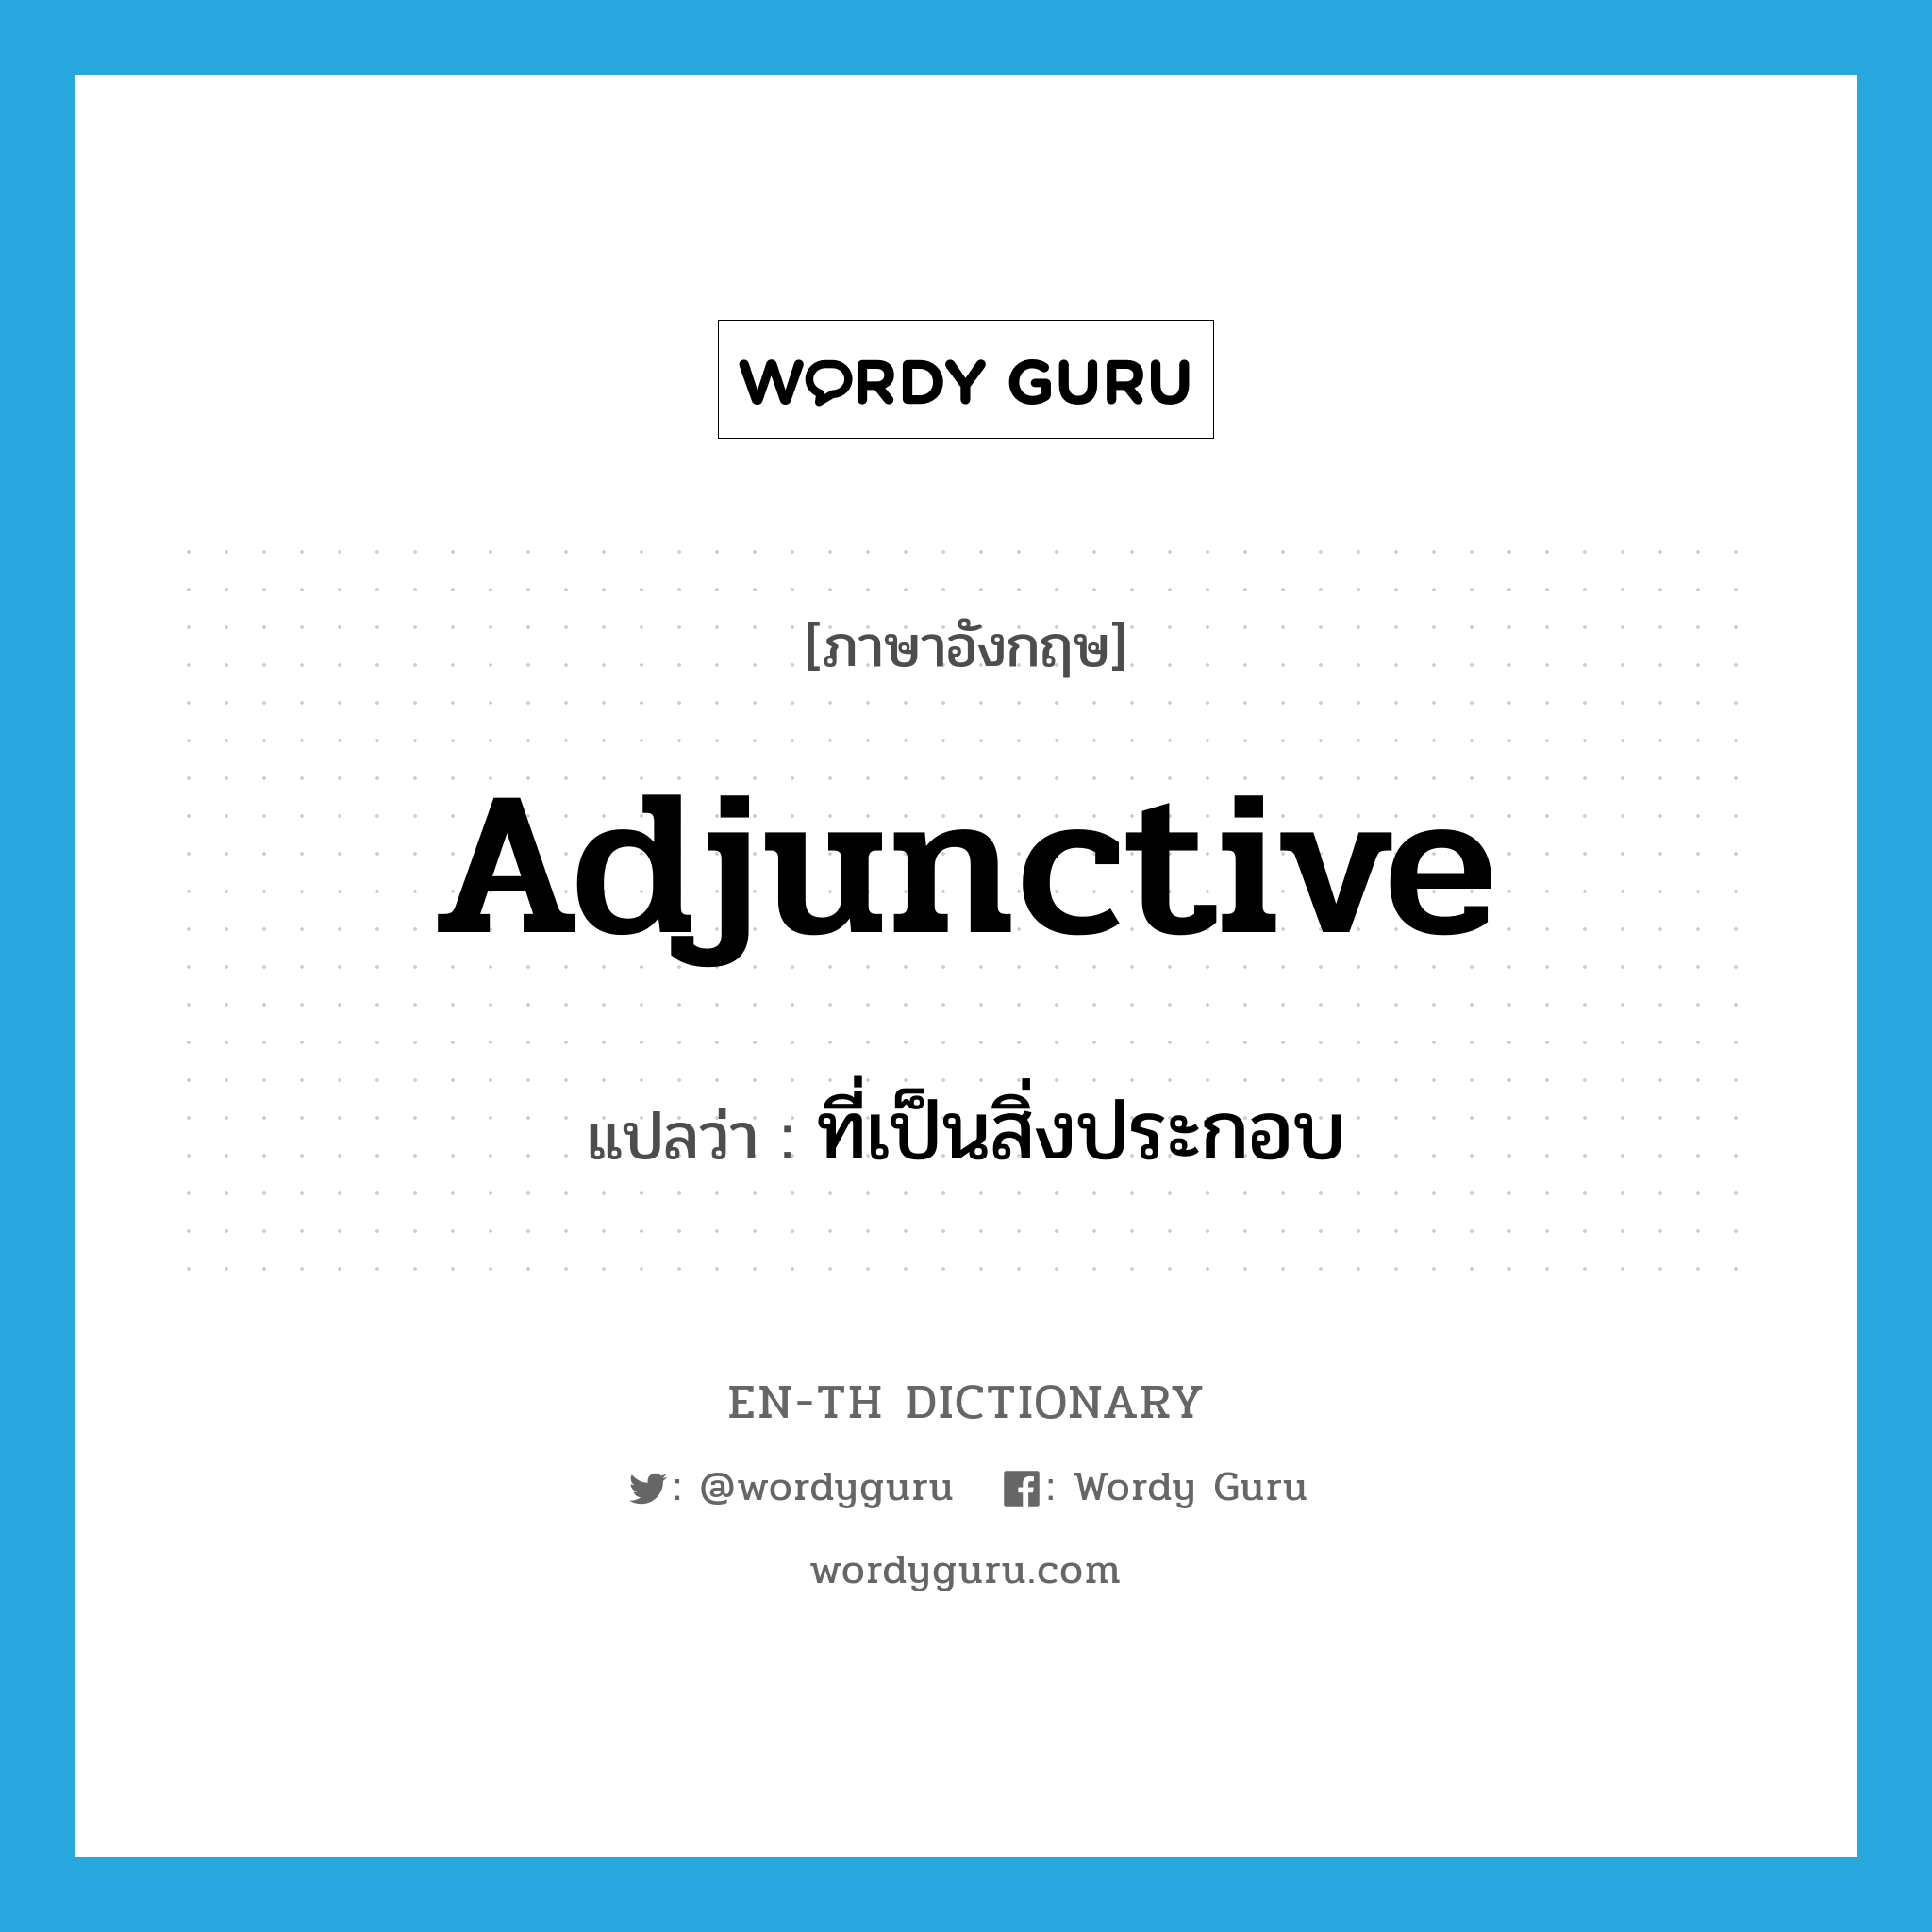 adjunctive